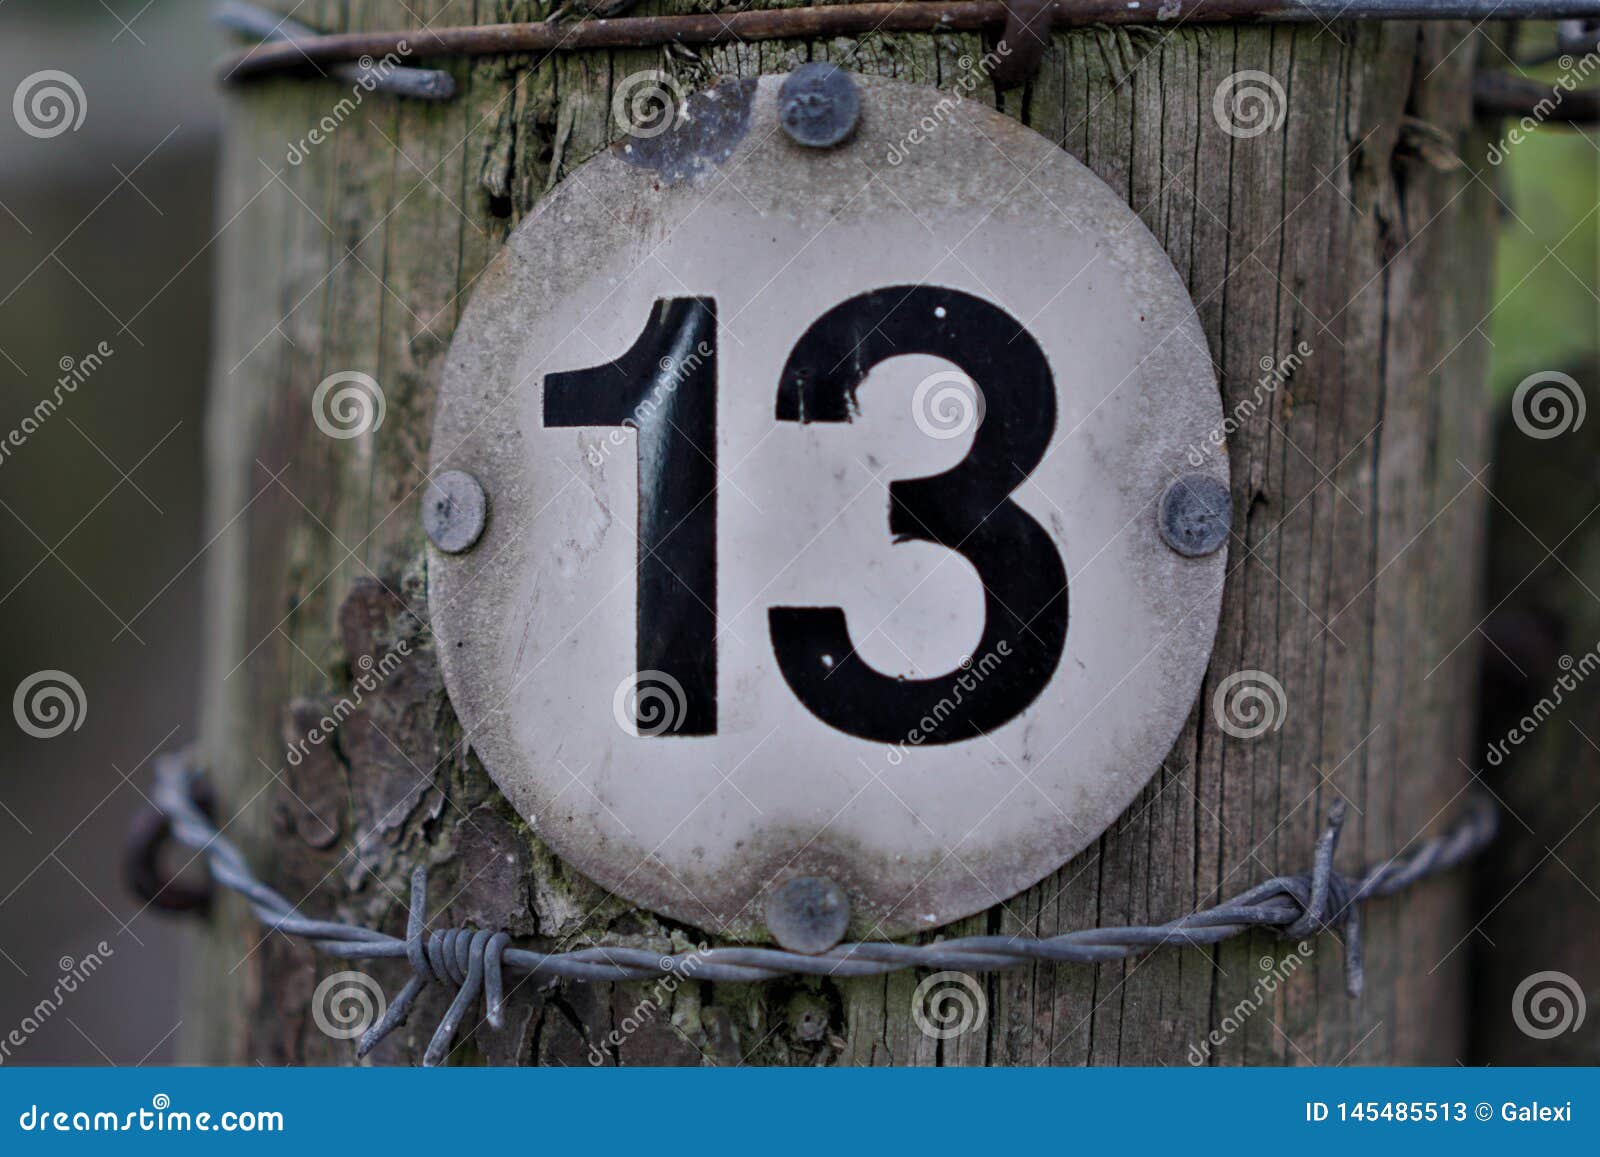 Вижу цифру 13. Красивое число 13. Красивая цифра 13. Цифра 13 картинка. Число 13 суеверия.